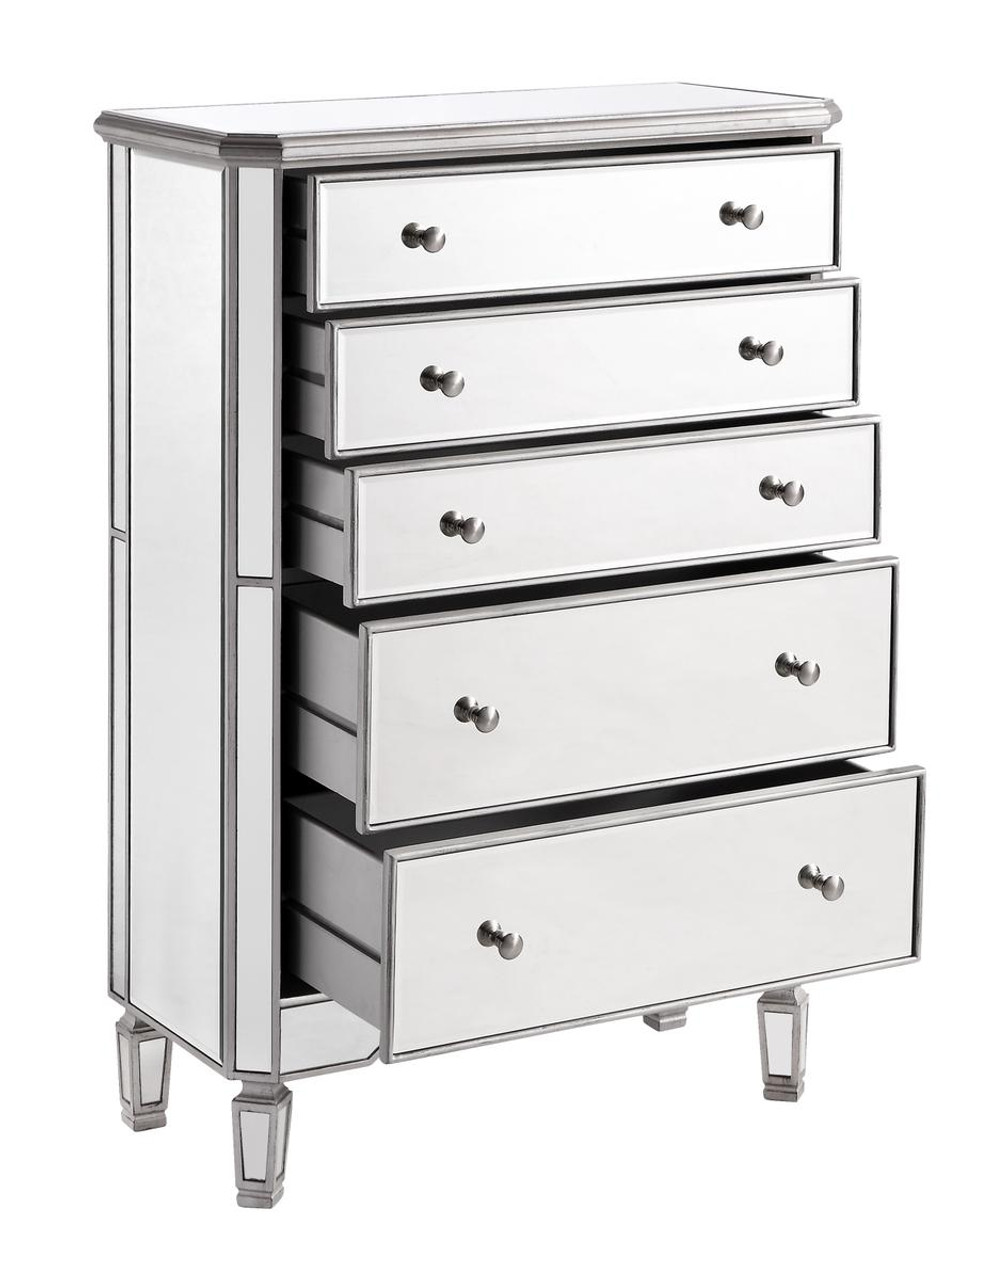 ELEGANT DECOR MF6-1026S 5 Drawer Cabinet 33 in. x 16 in. x 49 in. in Silver paint